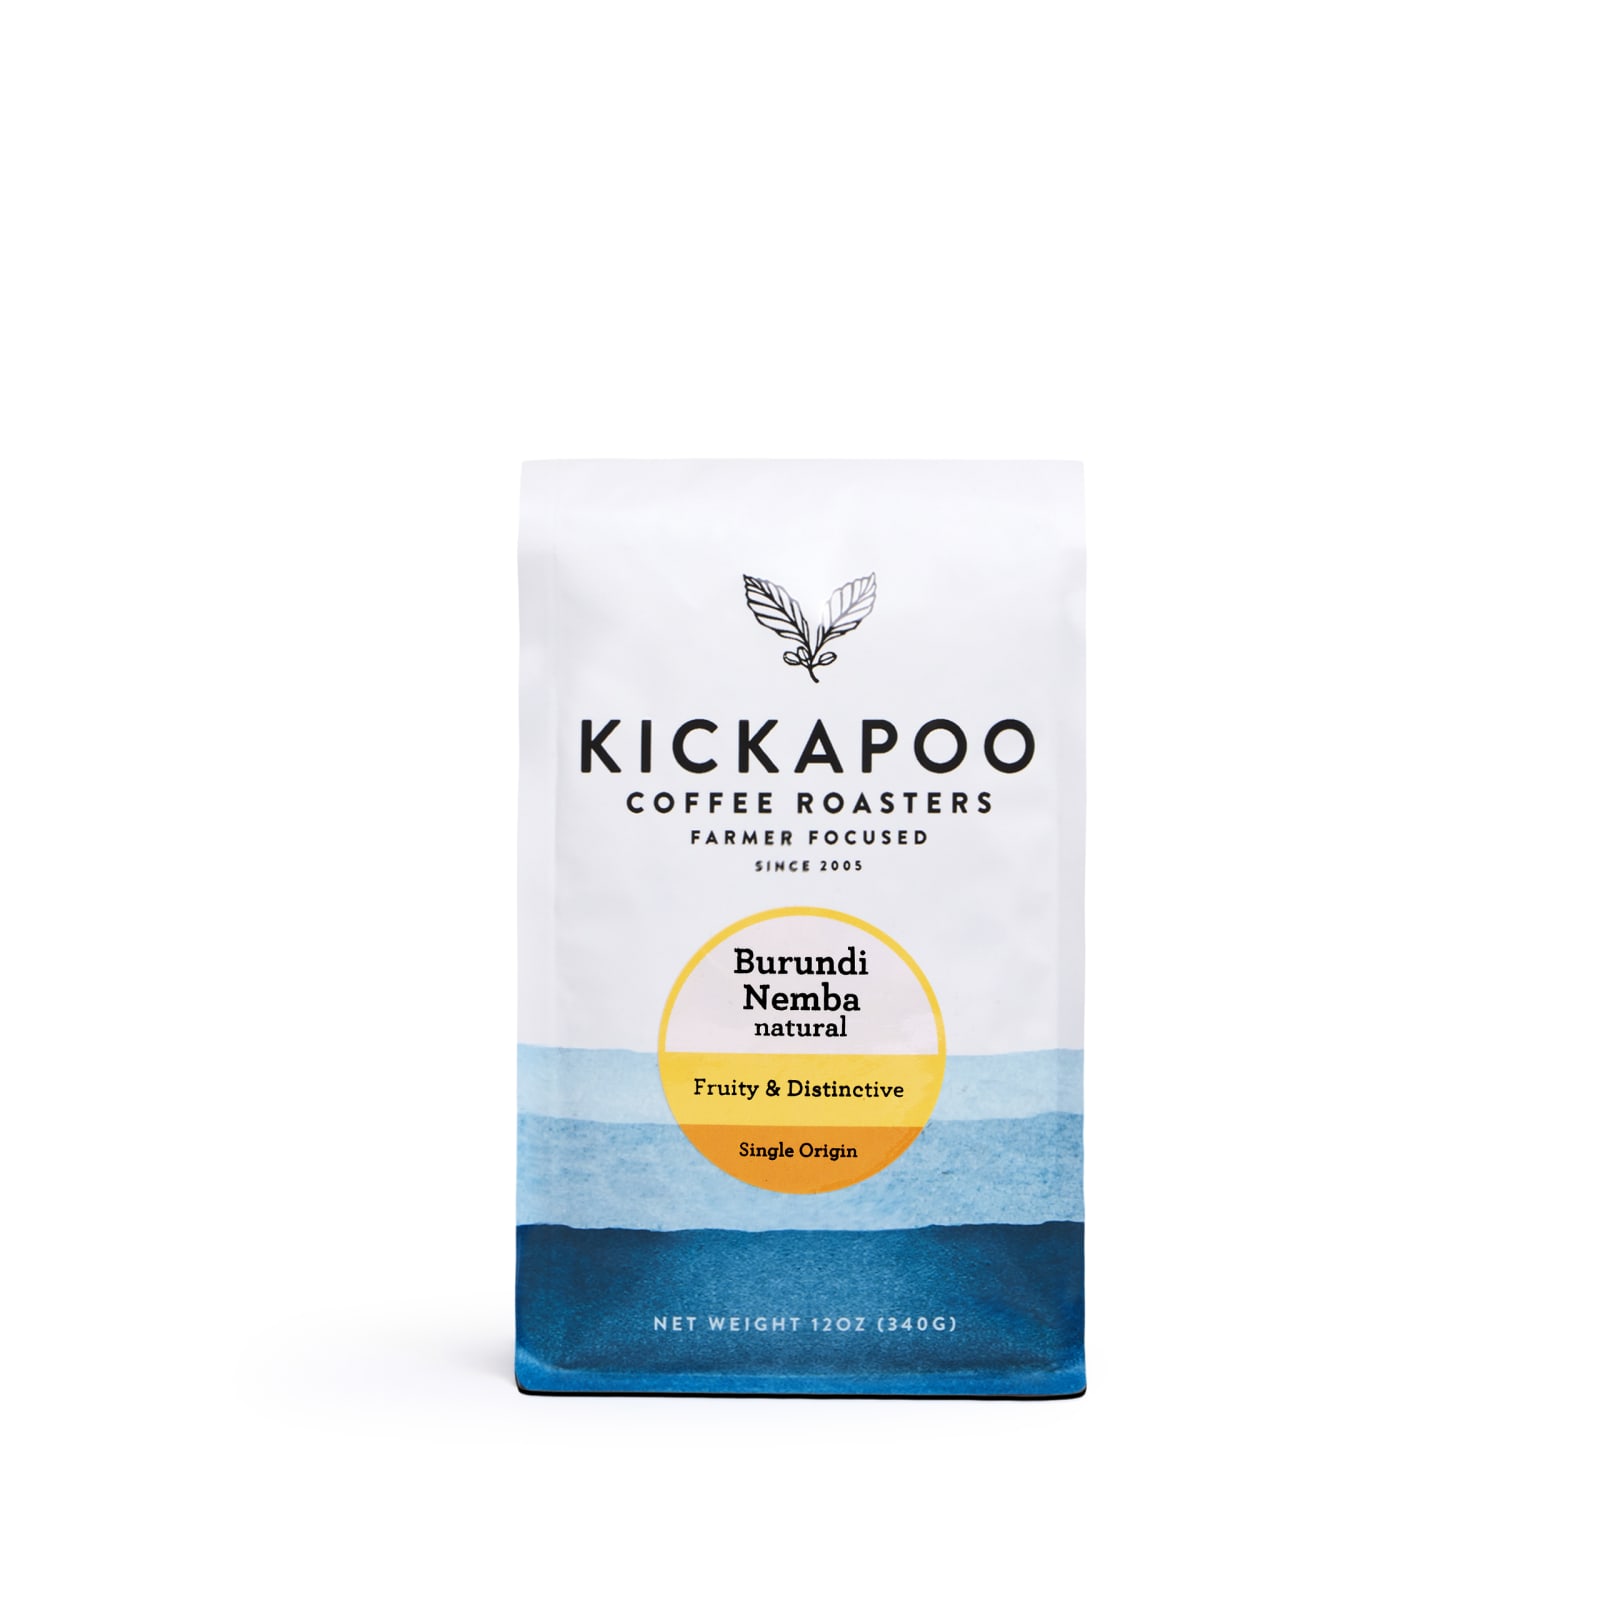 Kickapoo Burundi Nemba Natural coffee bag